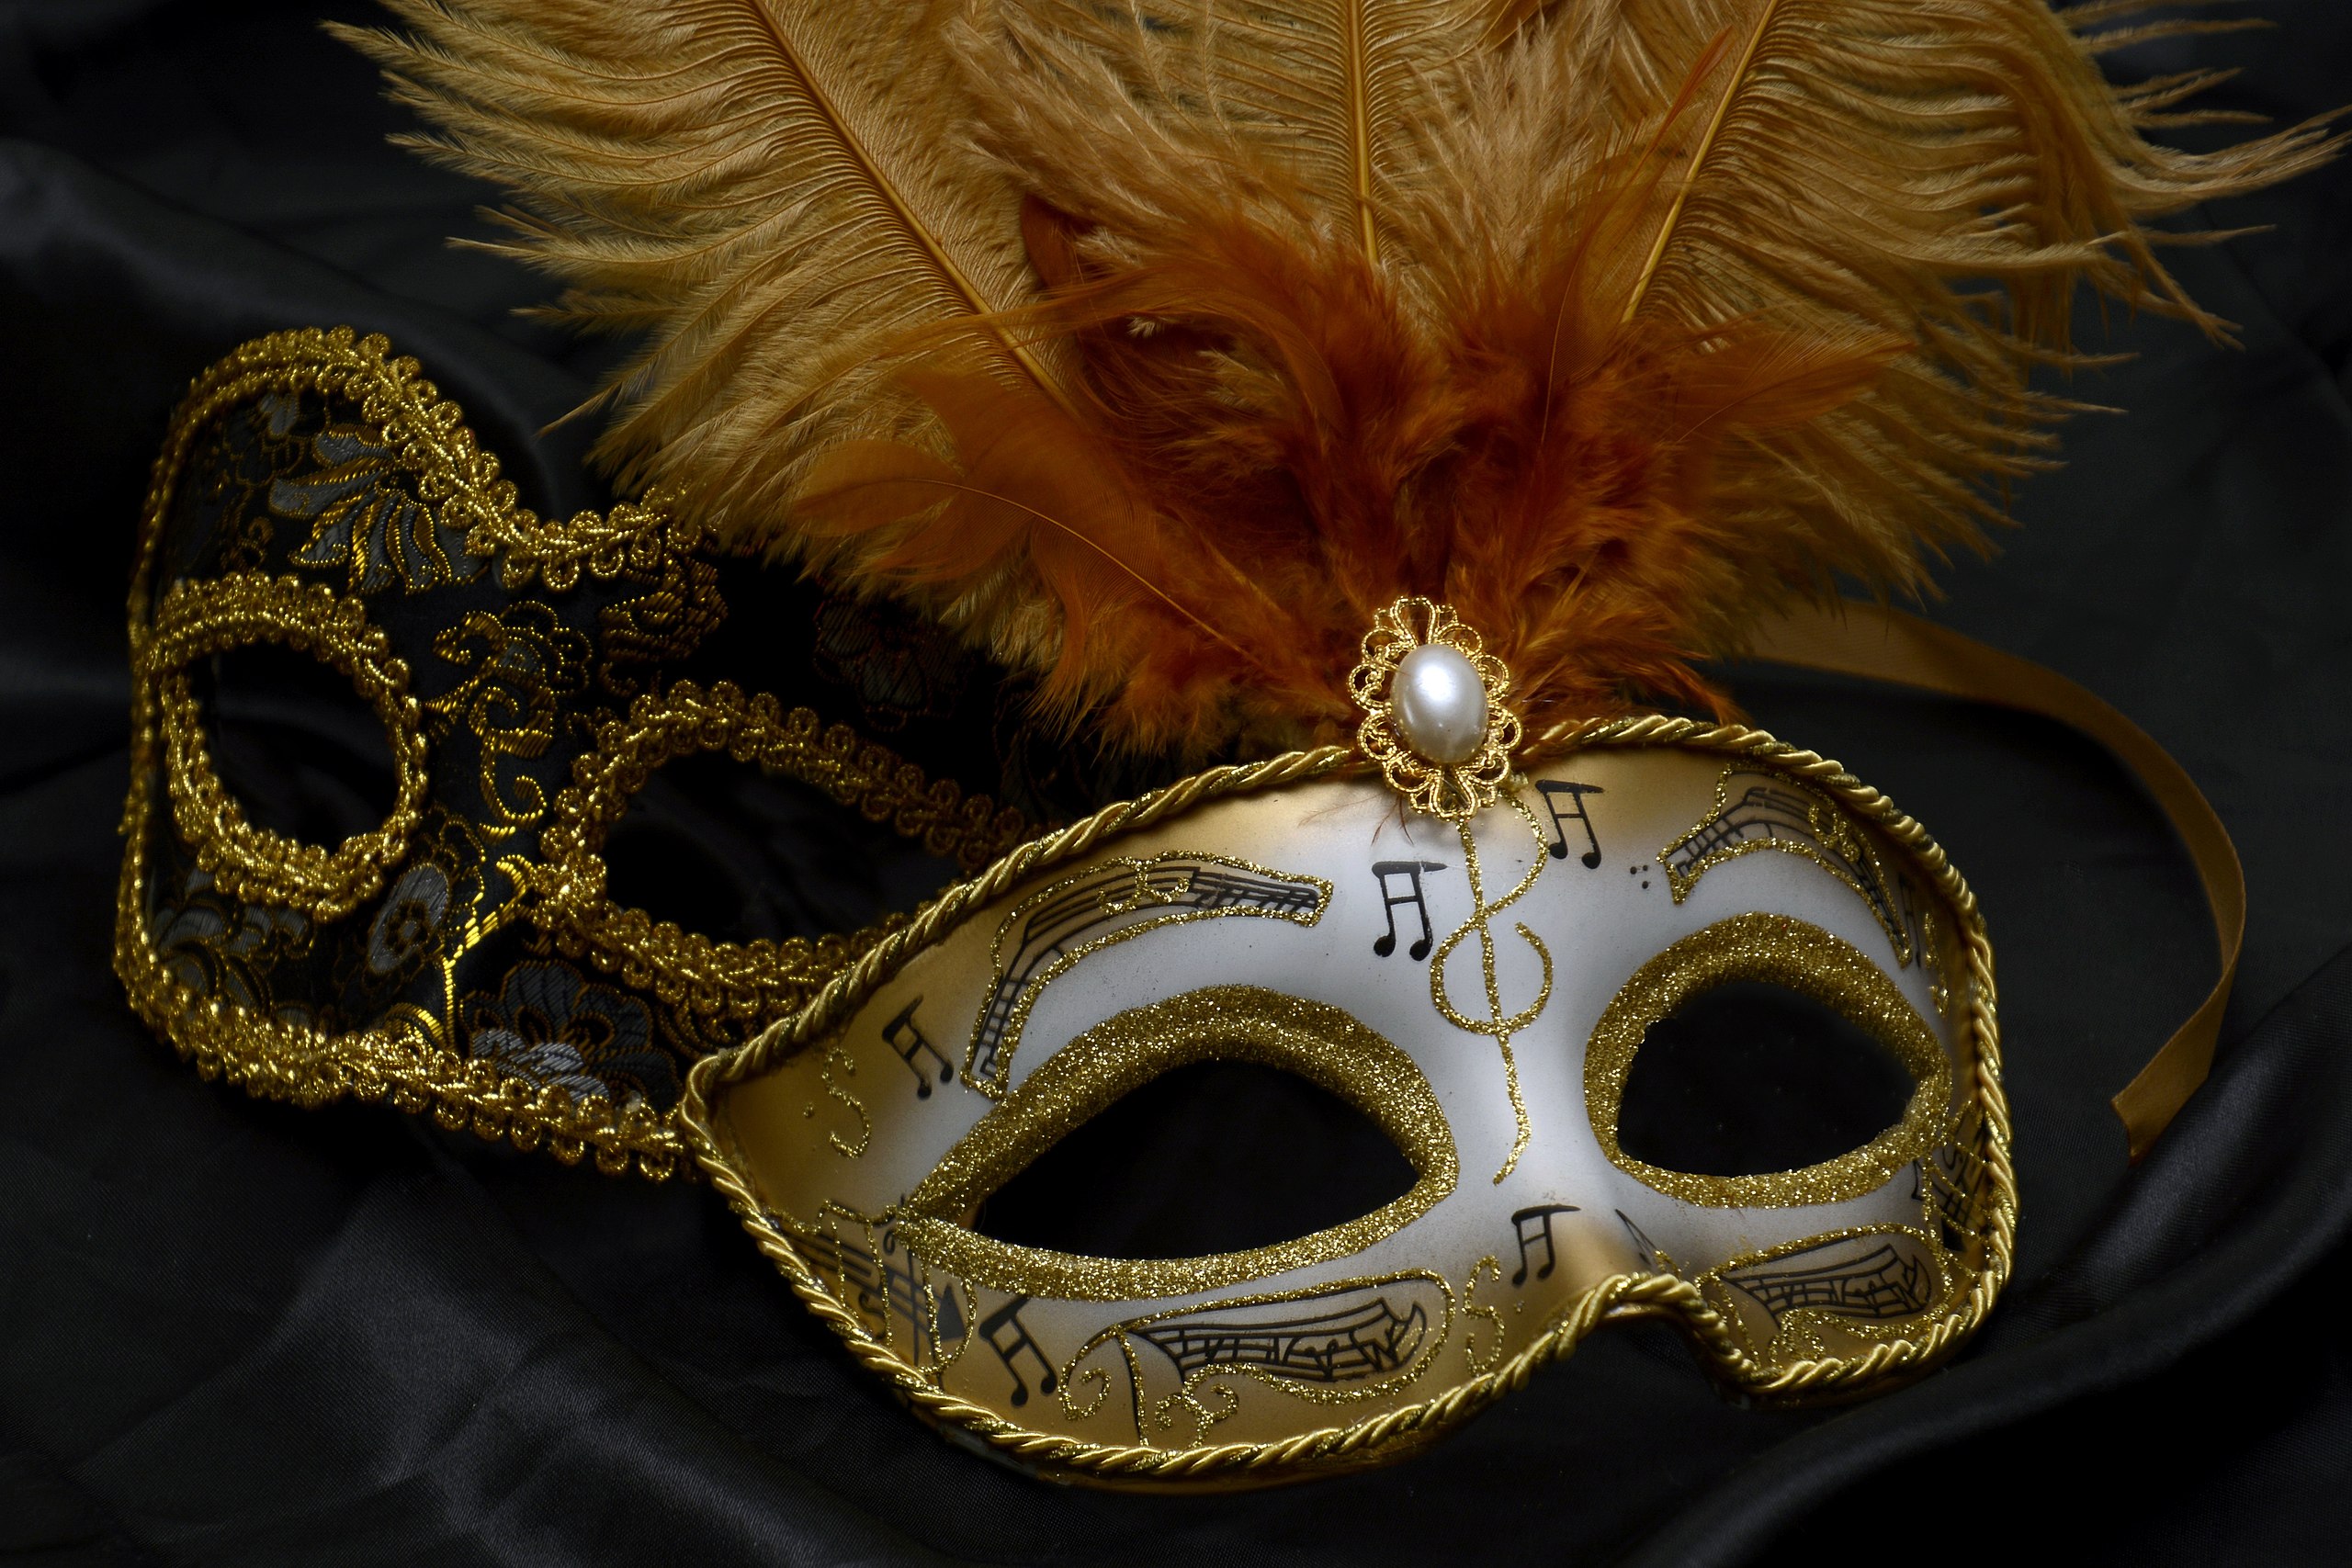 File:Mask-carnival-venice-mysterious-close-romance-1371680.jpg Wikipedia